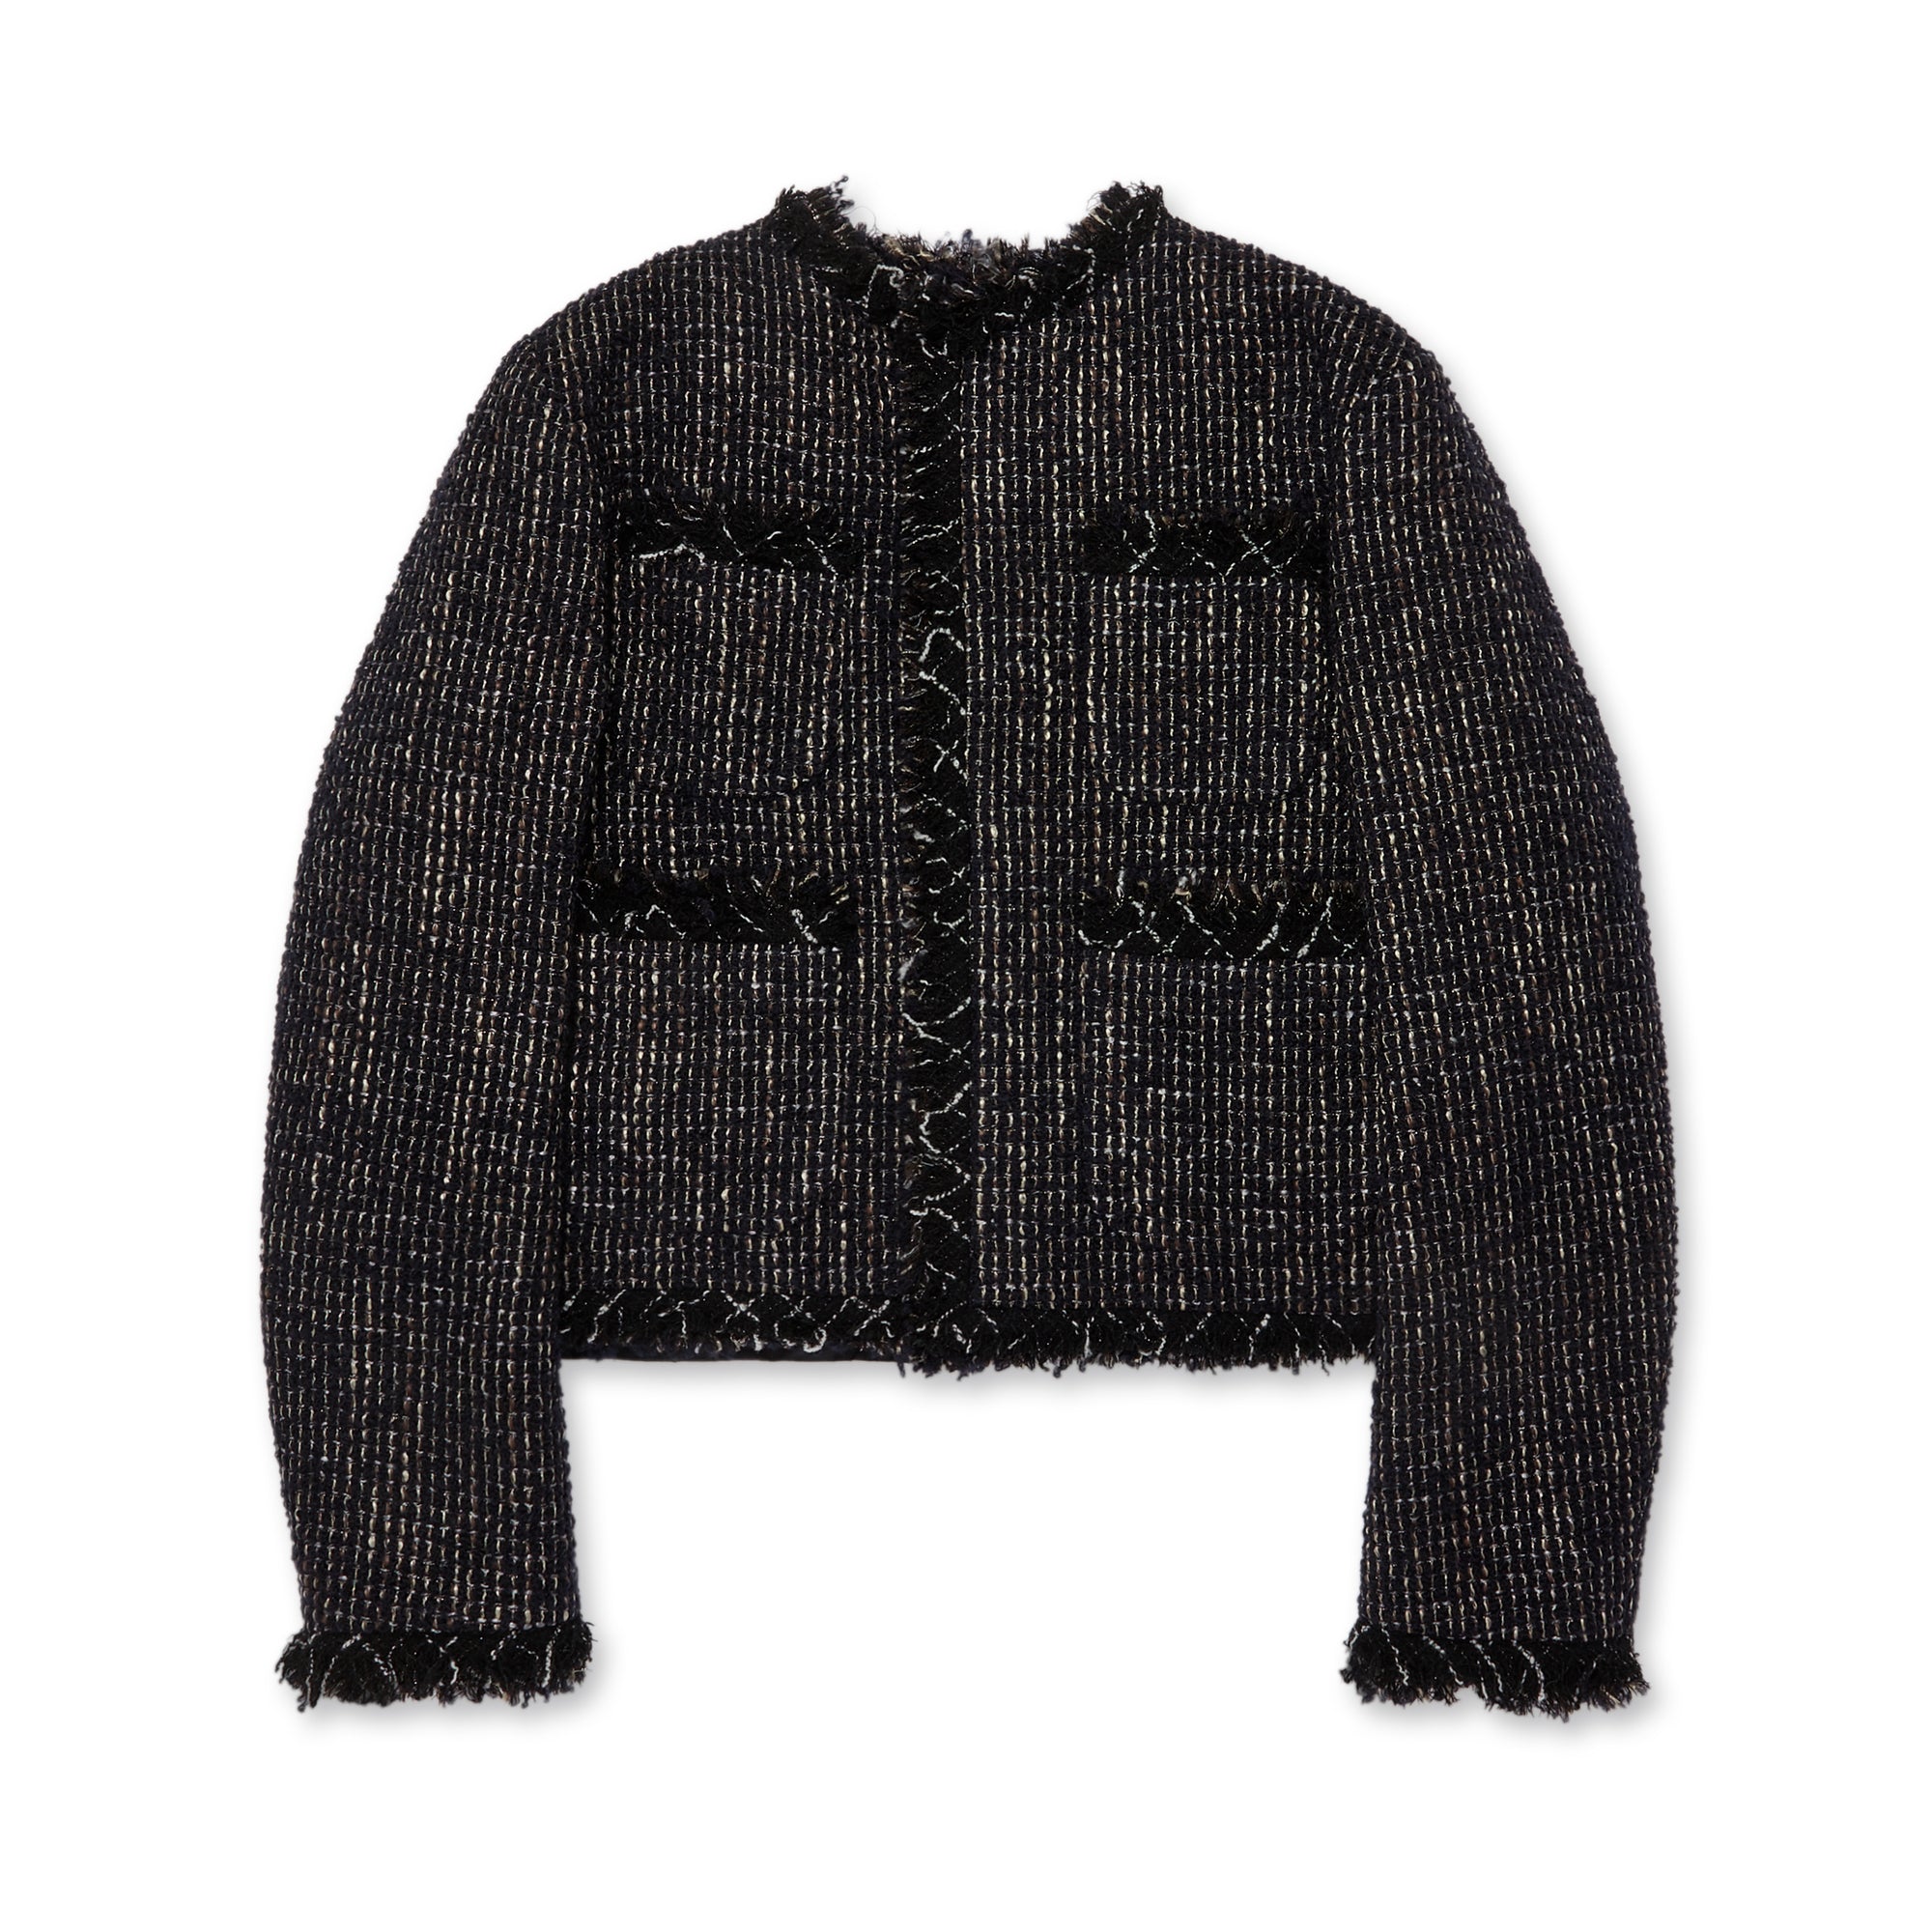 sacai - Women’s Tweed Jacket - (Black) view 1